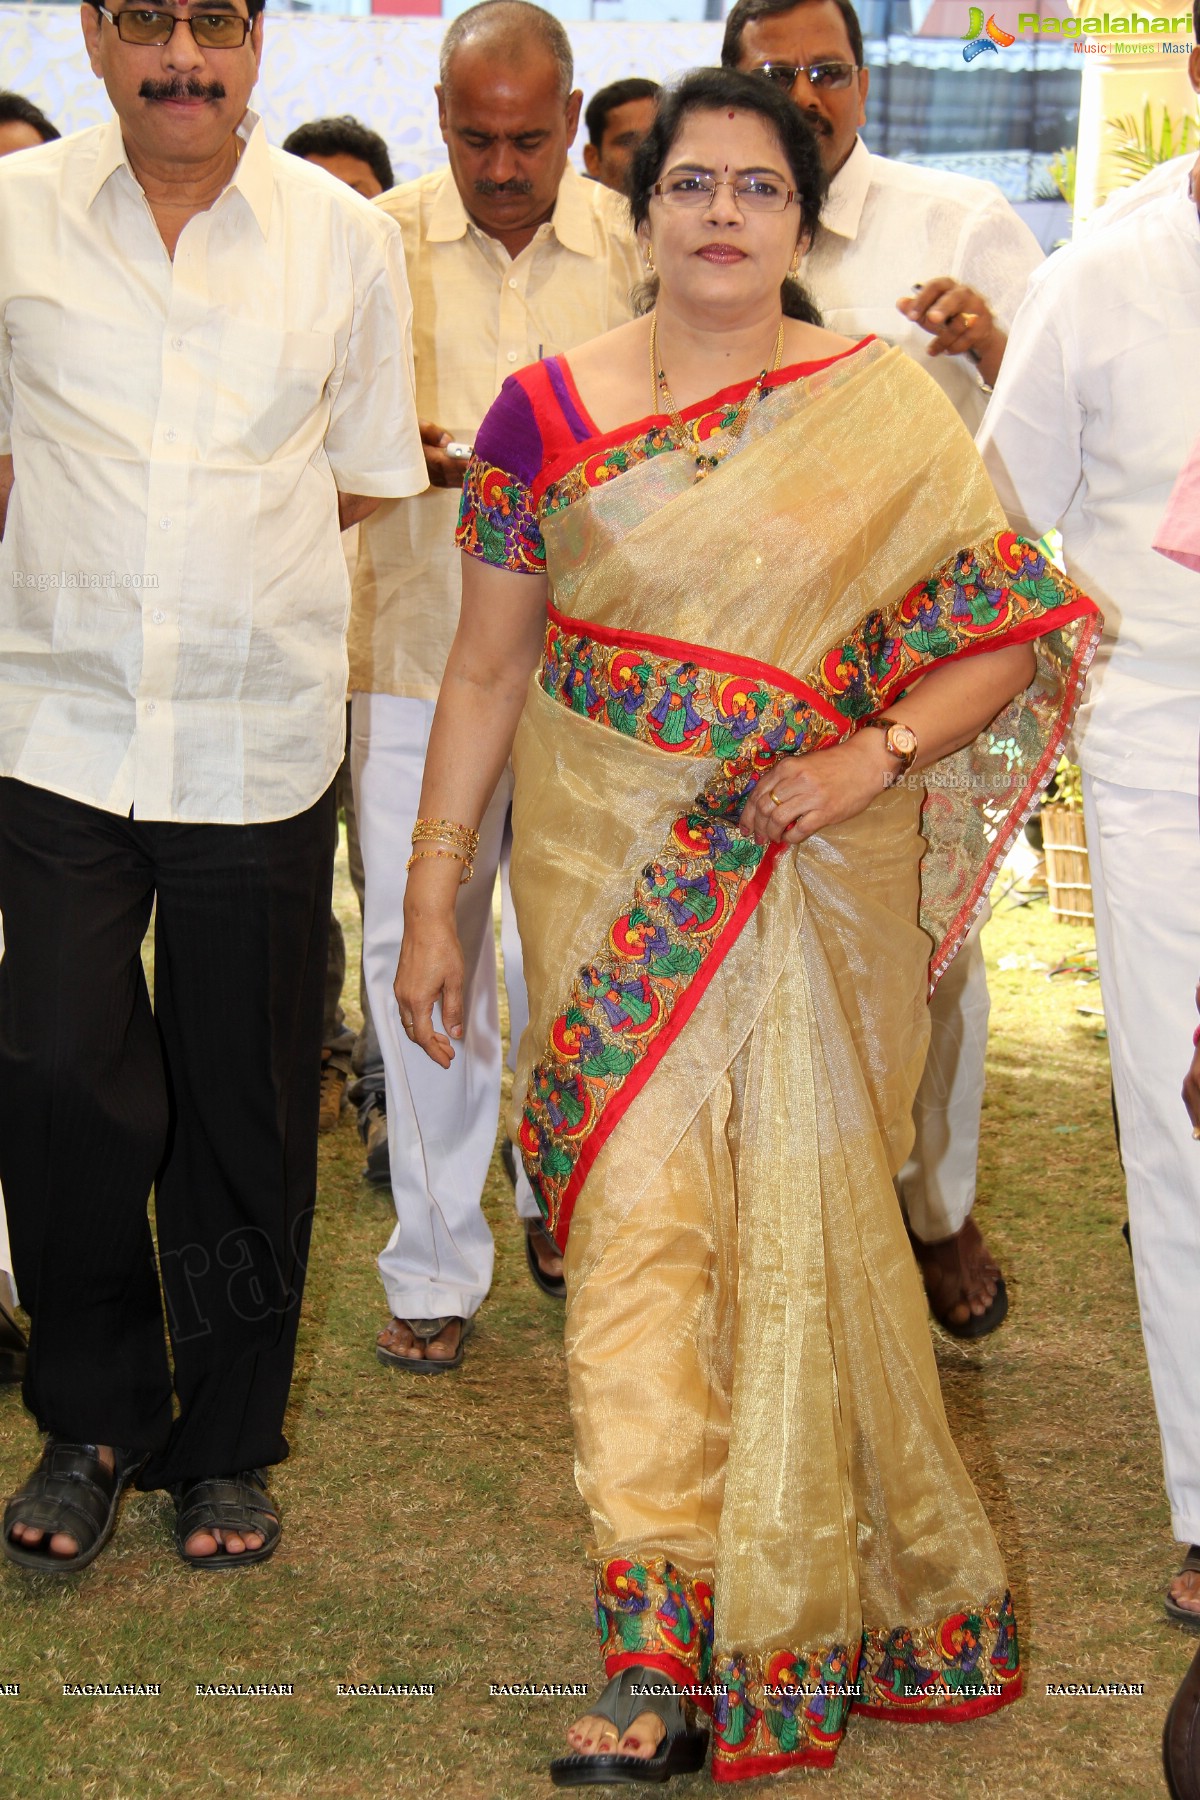 Nukarapu Suryaprakash Rao's Daughter Grishma's Wedding at Image Gardens, Hyderabad